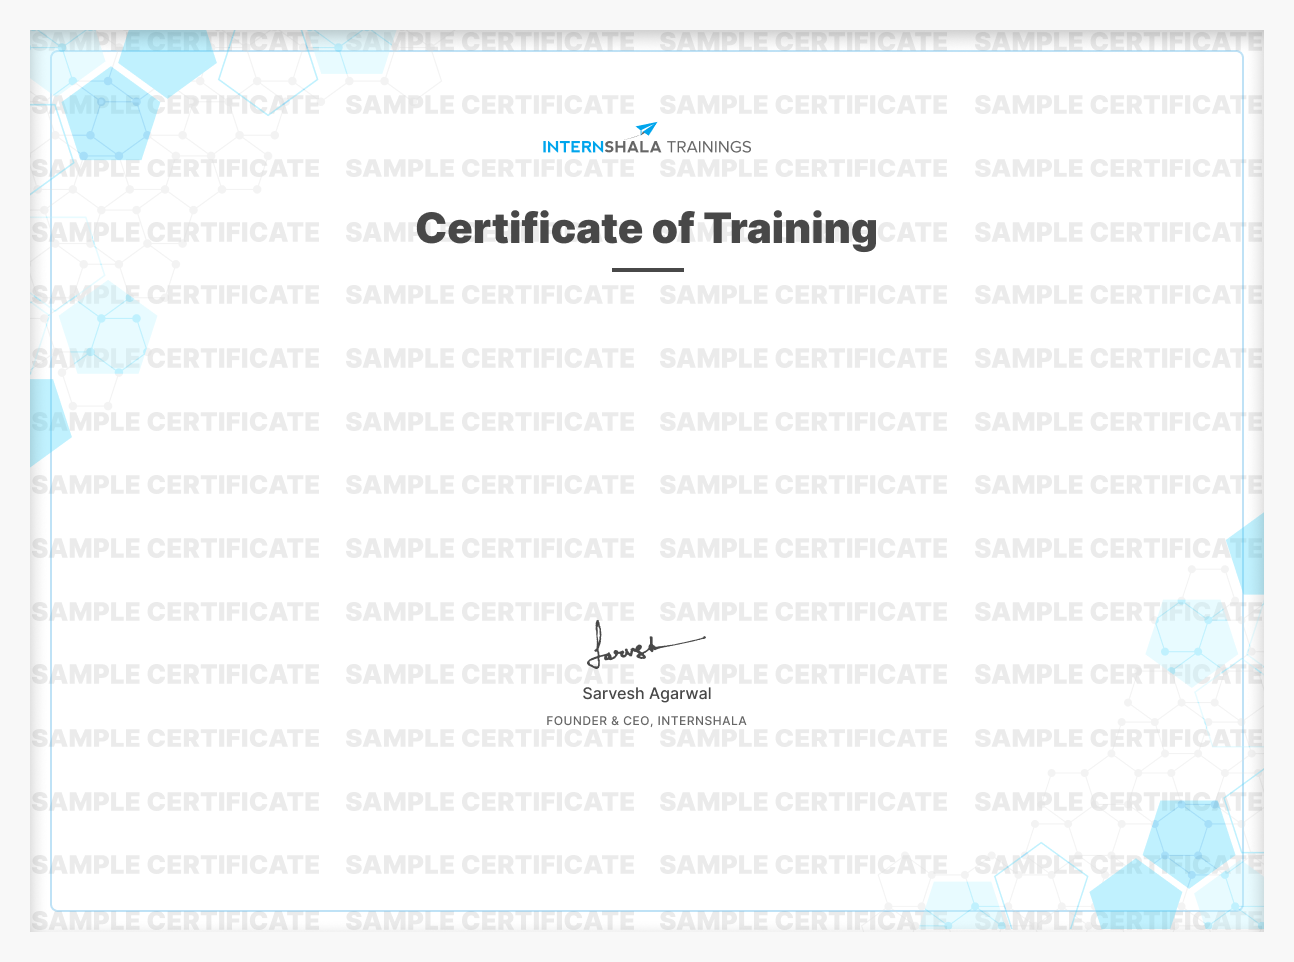 Machine Learning Certification Training